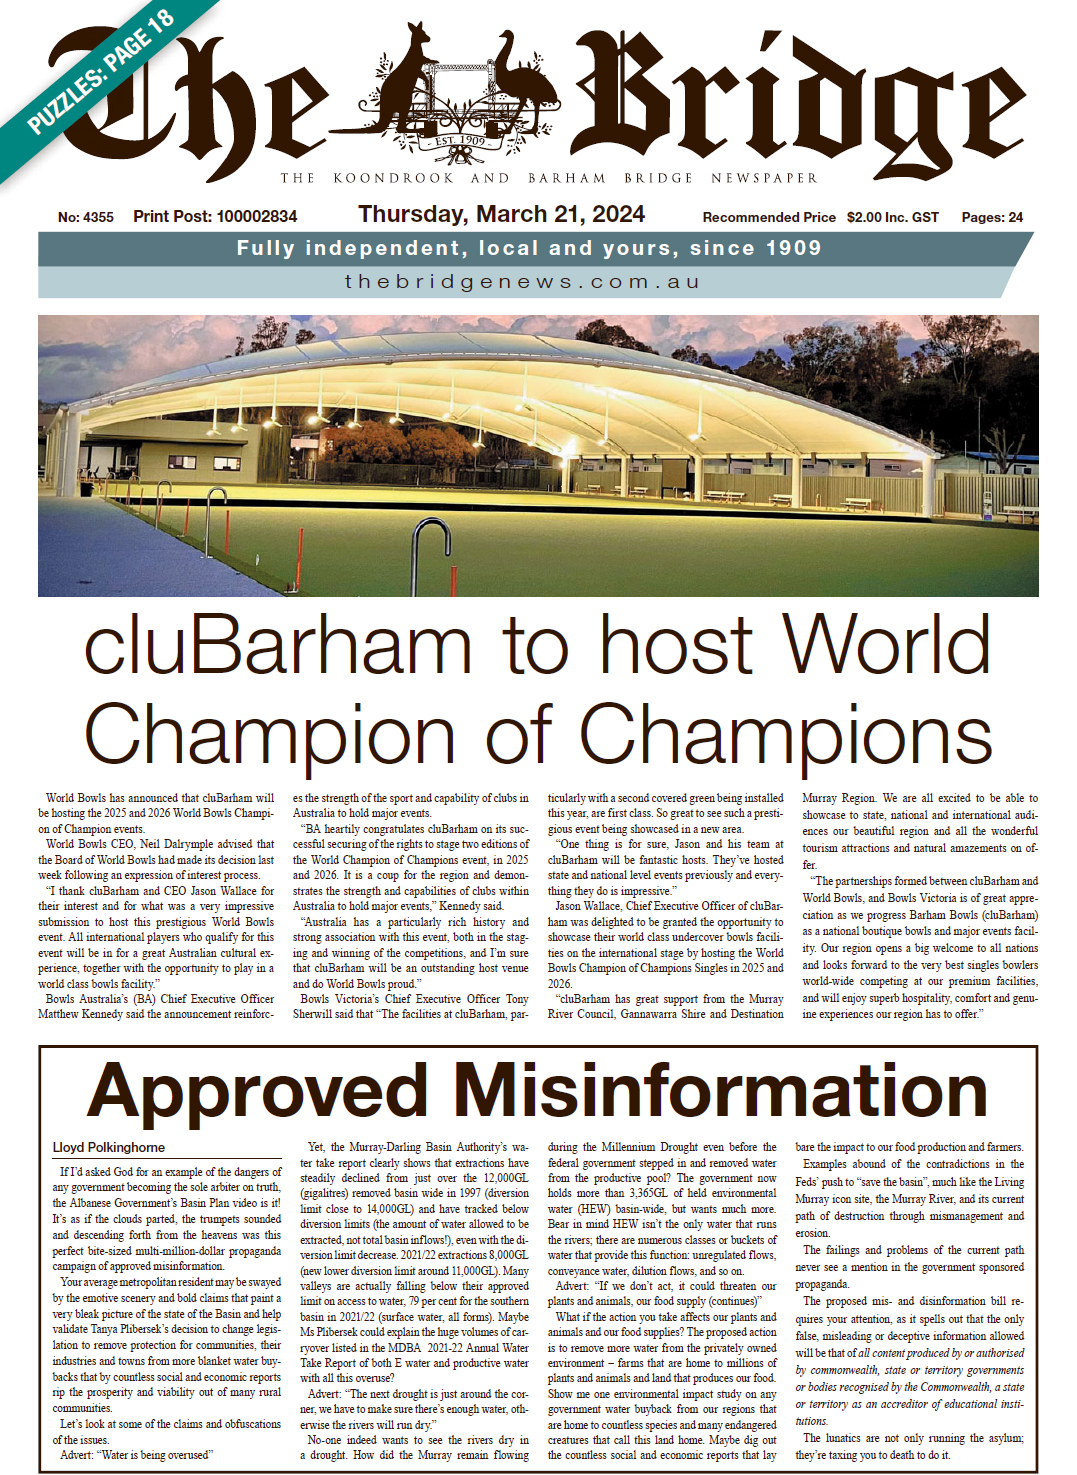 The Koondrook and Barham Bridge Newspaper 21 March 2024